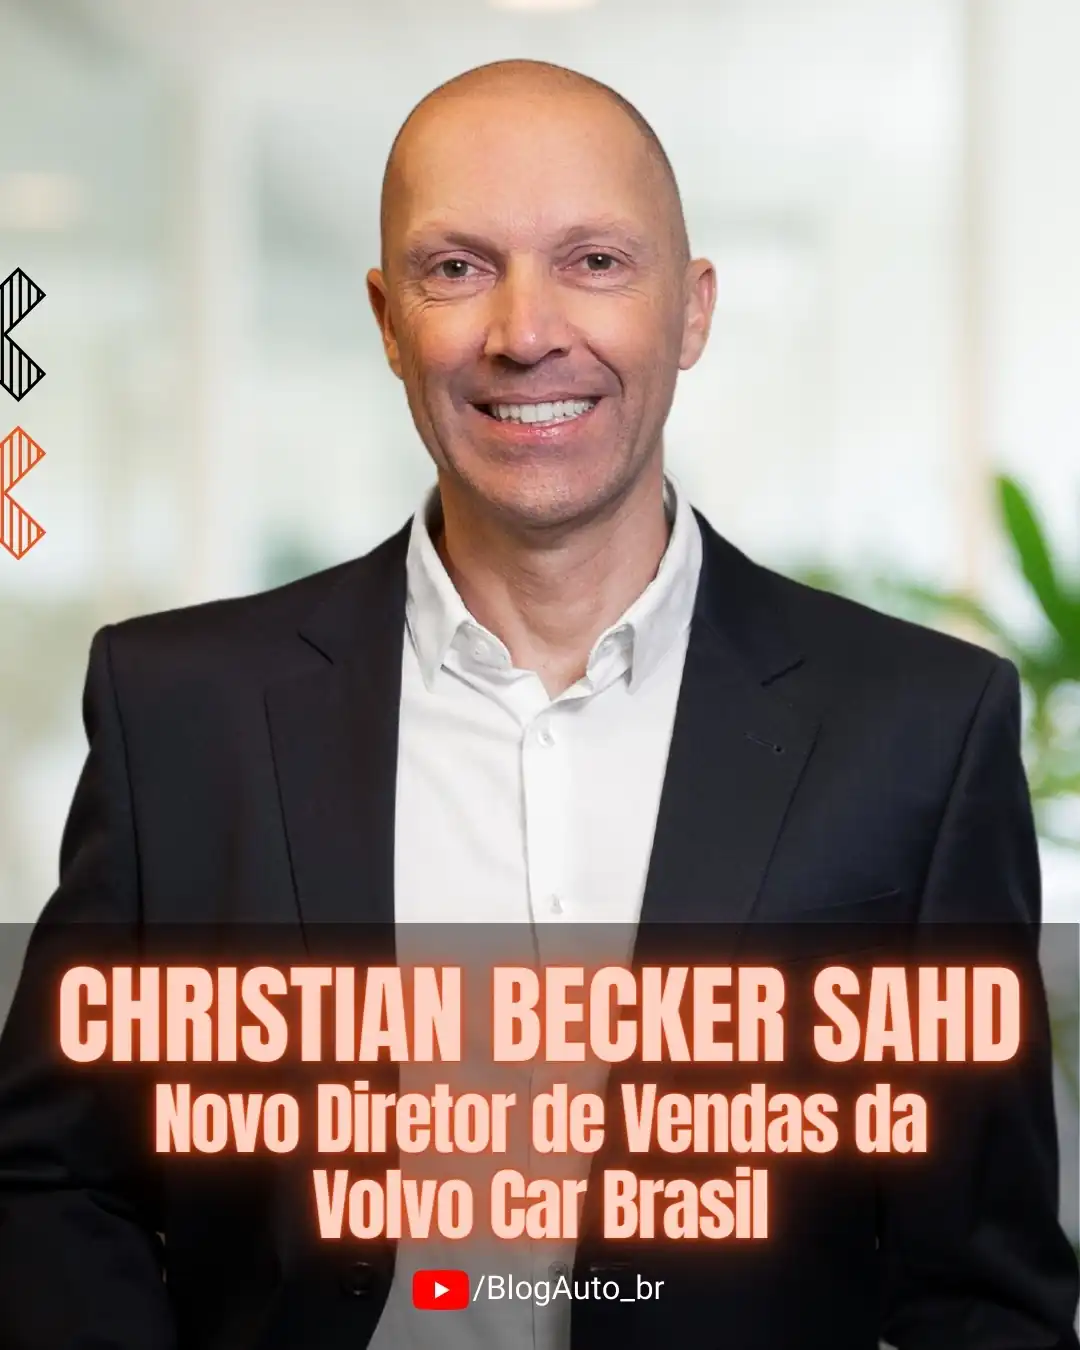 Christian Becker Sahd